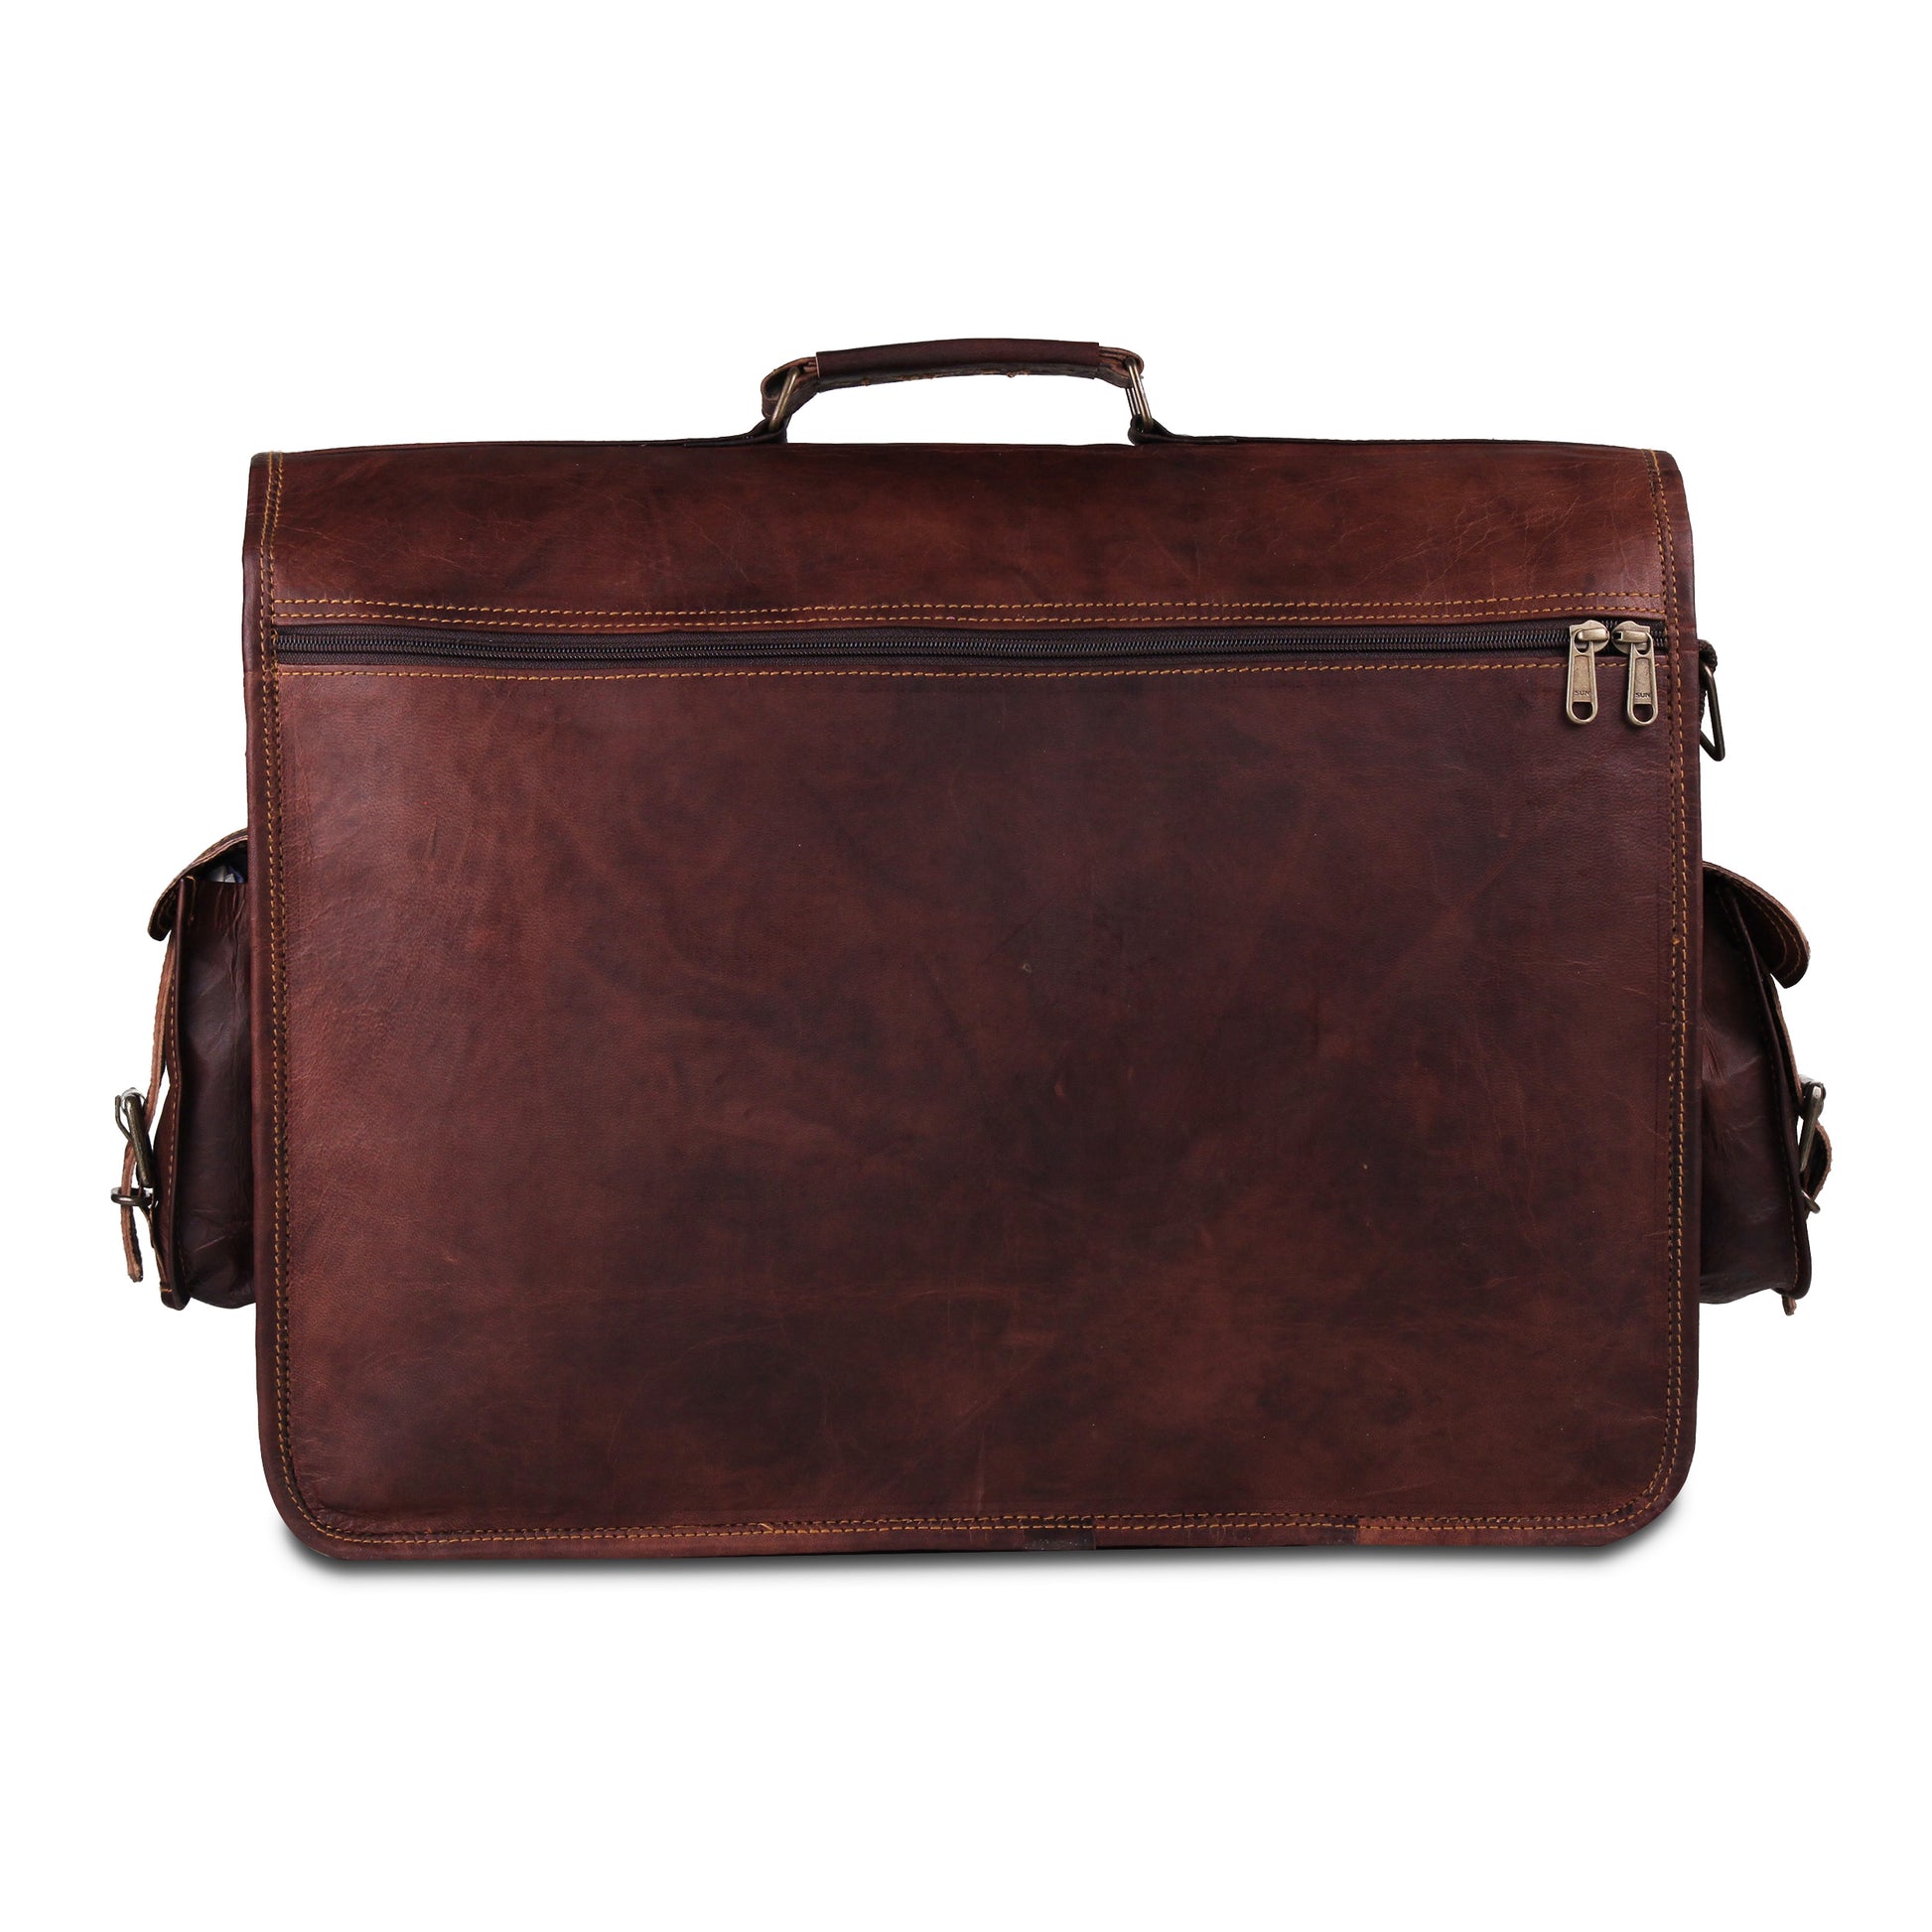 Vintage Leather Messenger Bag with Top Handle and Adjustable Strap